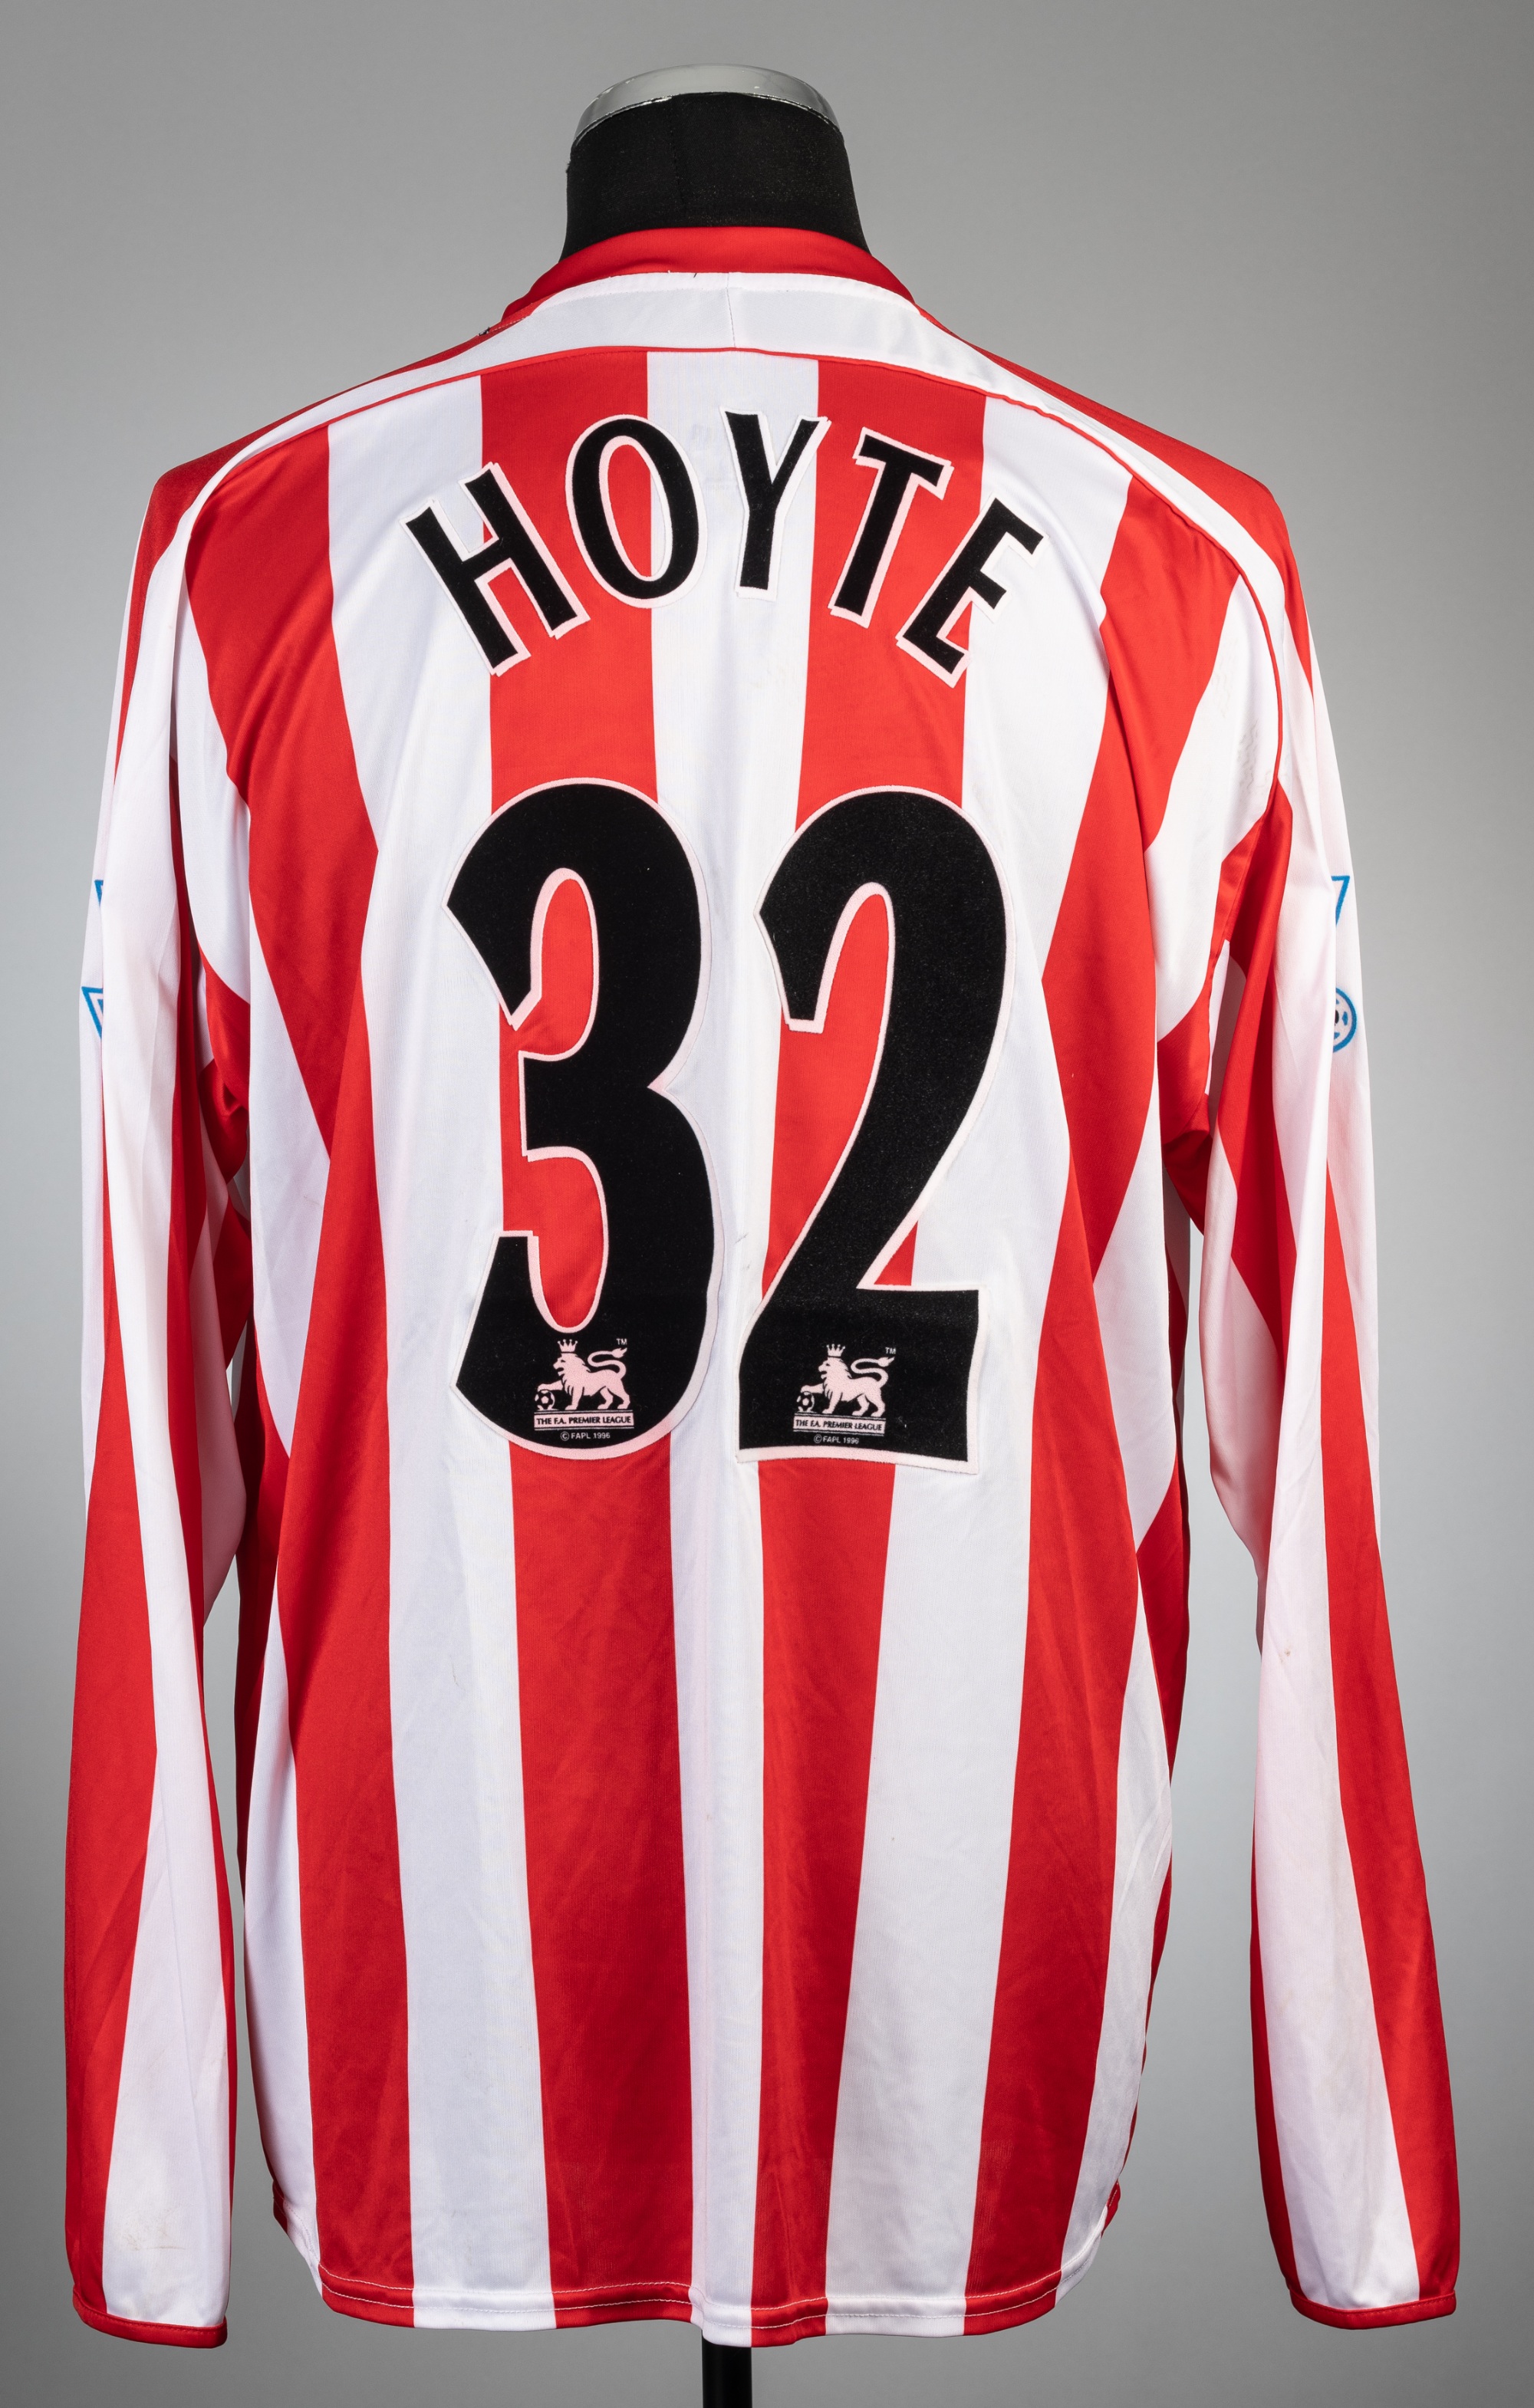 Justin Hoyte red & white striped Sunderland AFC no.32 home jersey, season 2005-06,